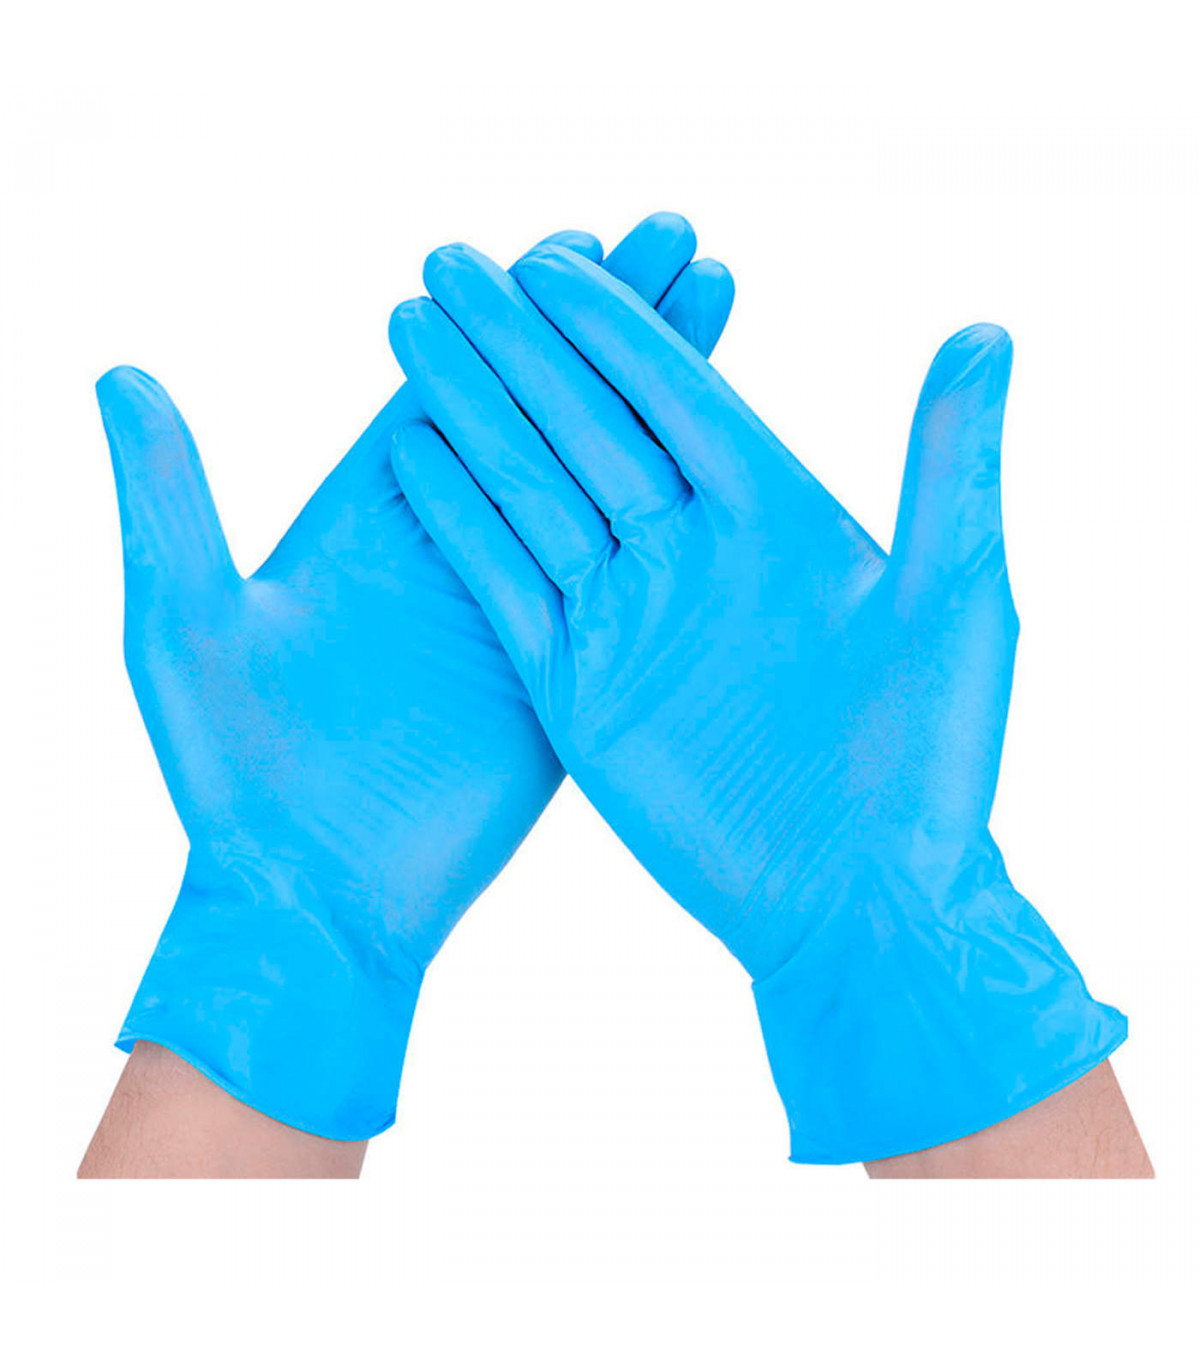 Guantes de nitrilo sin polvo talla S 6-7, Guantes desechables de examen,  color azul, 100 unidades